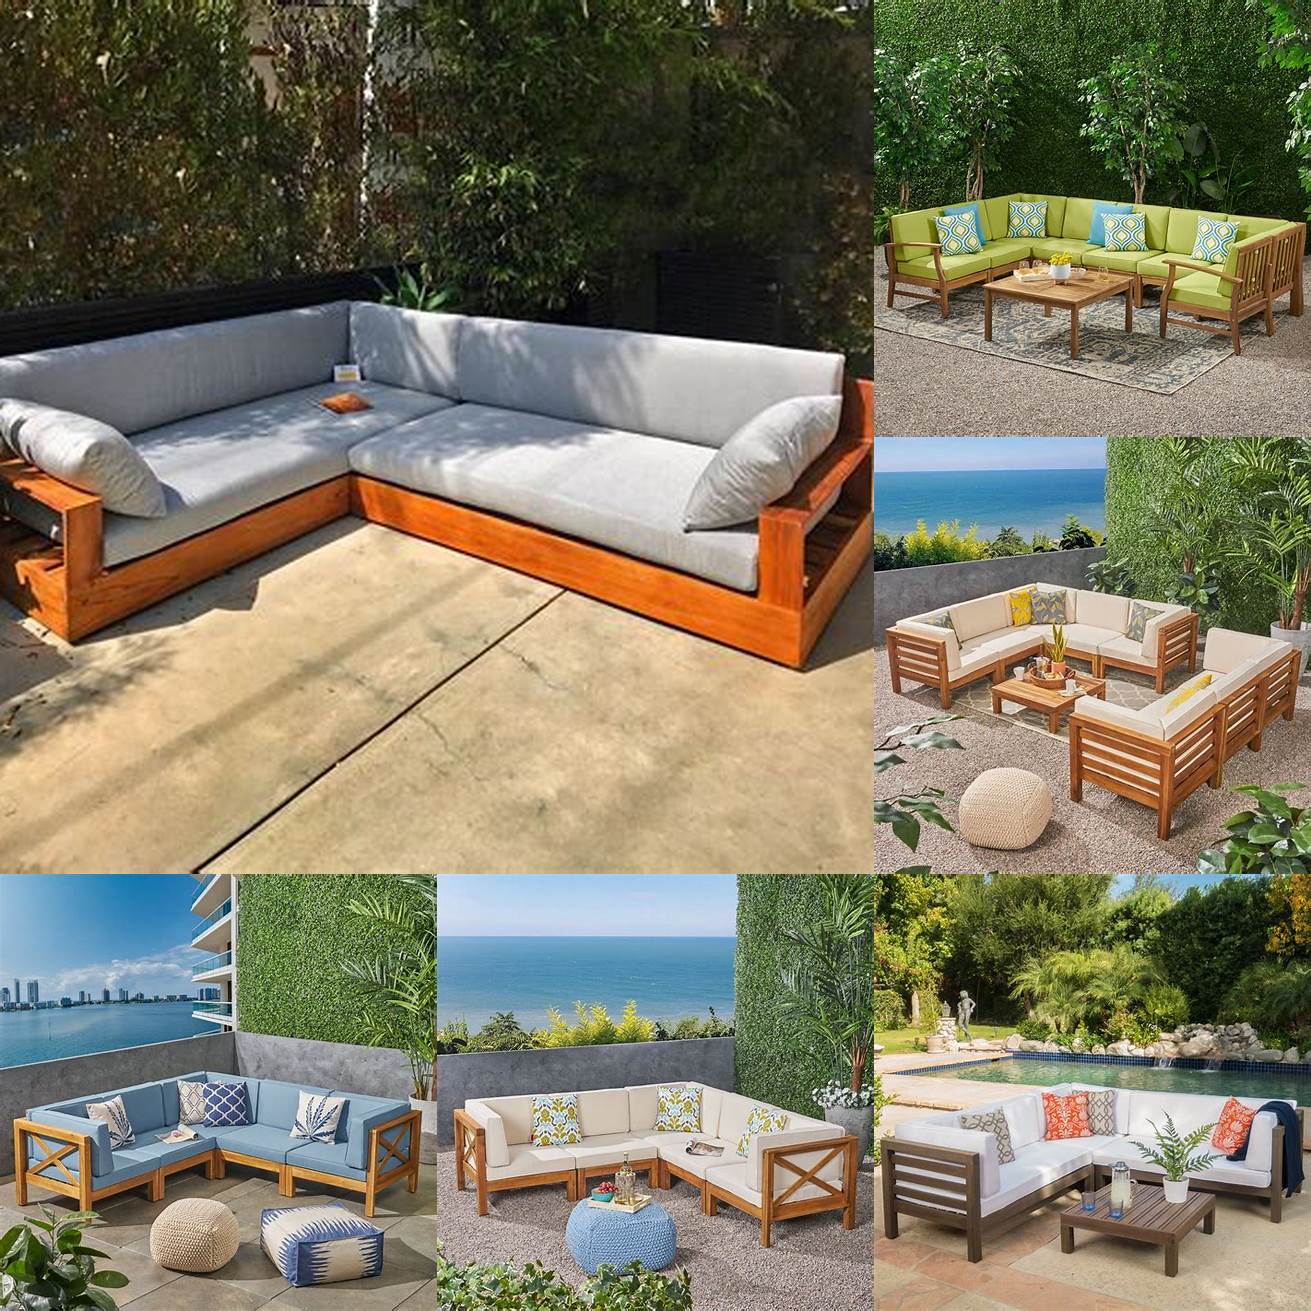 4 Teak outdoor furniture sectional deep cushions on a deck